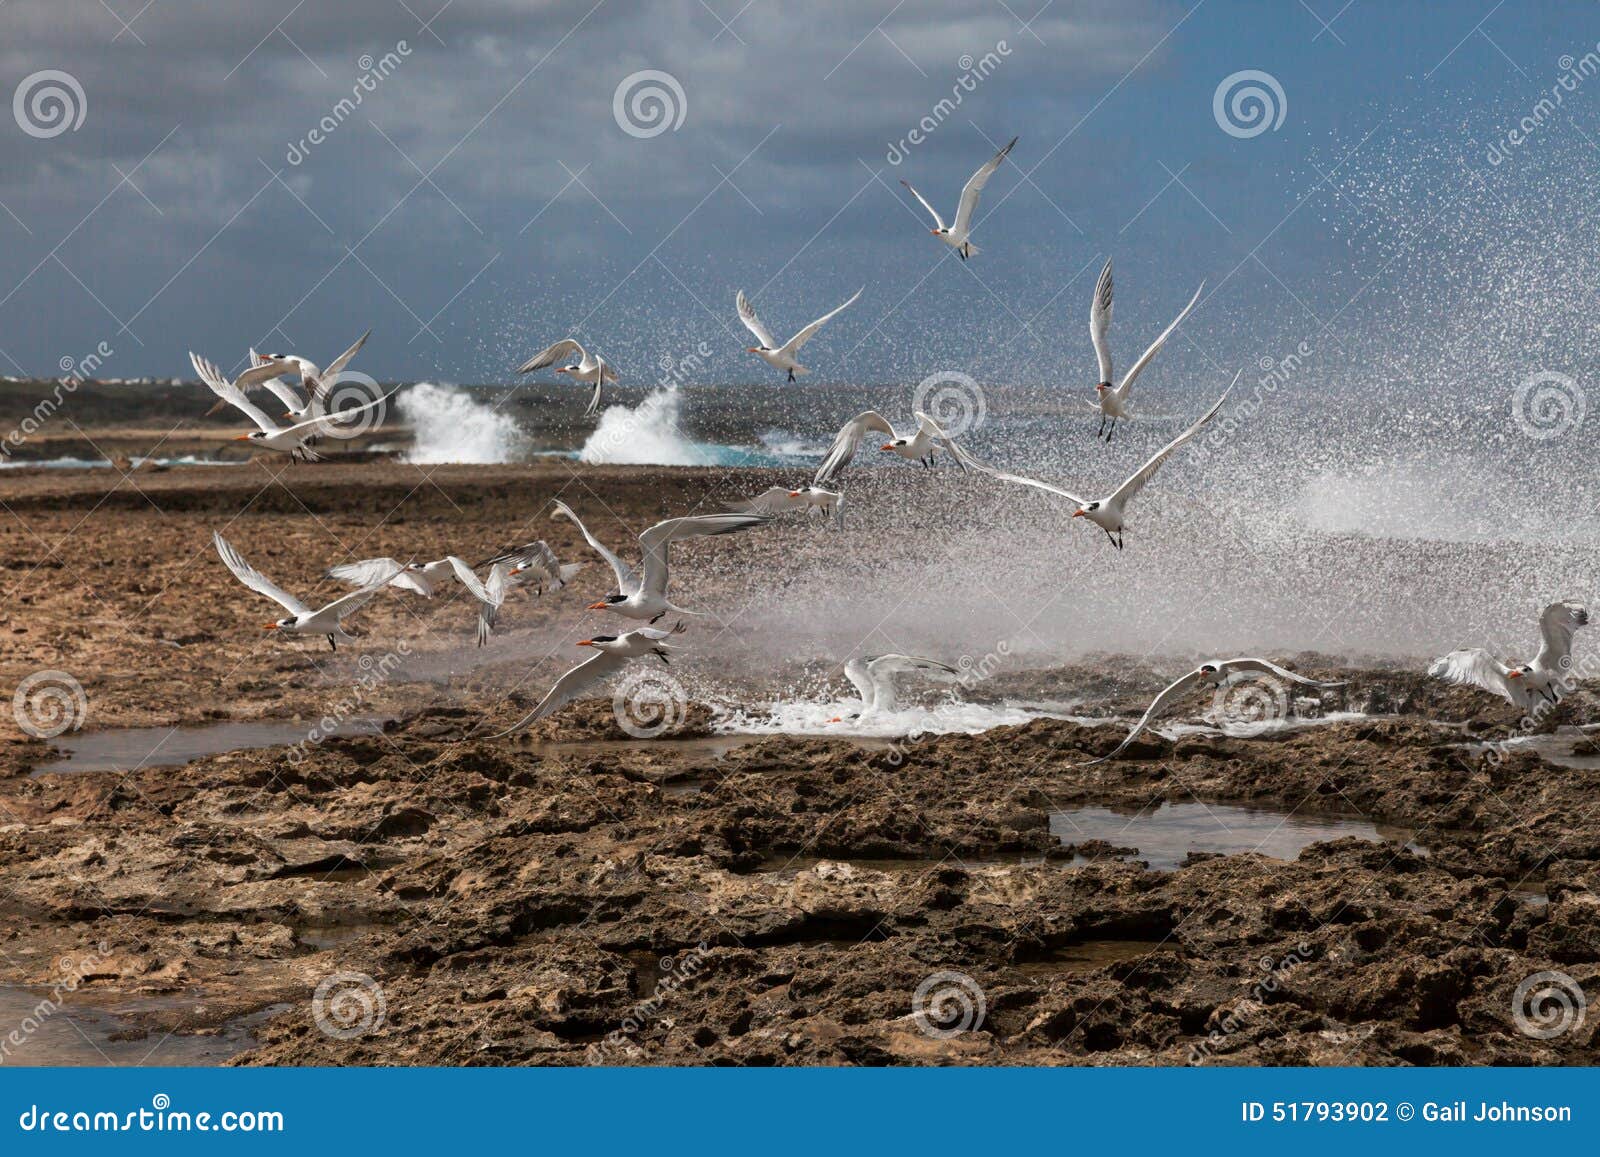 playa canoa waves and birds